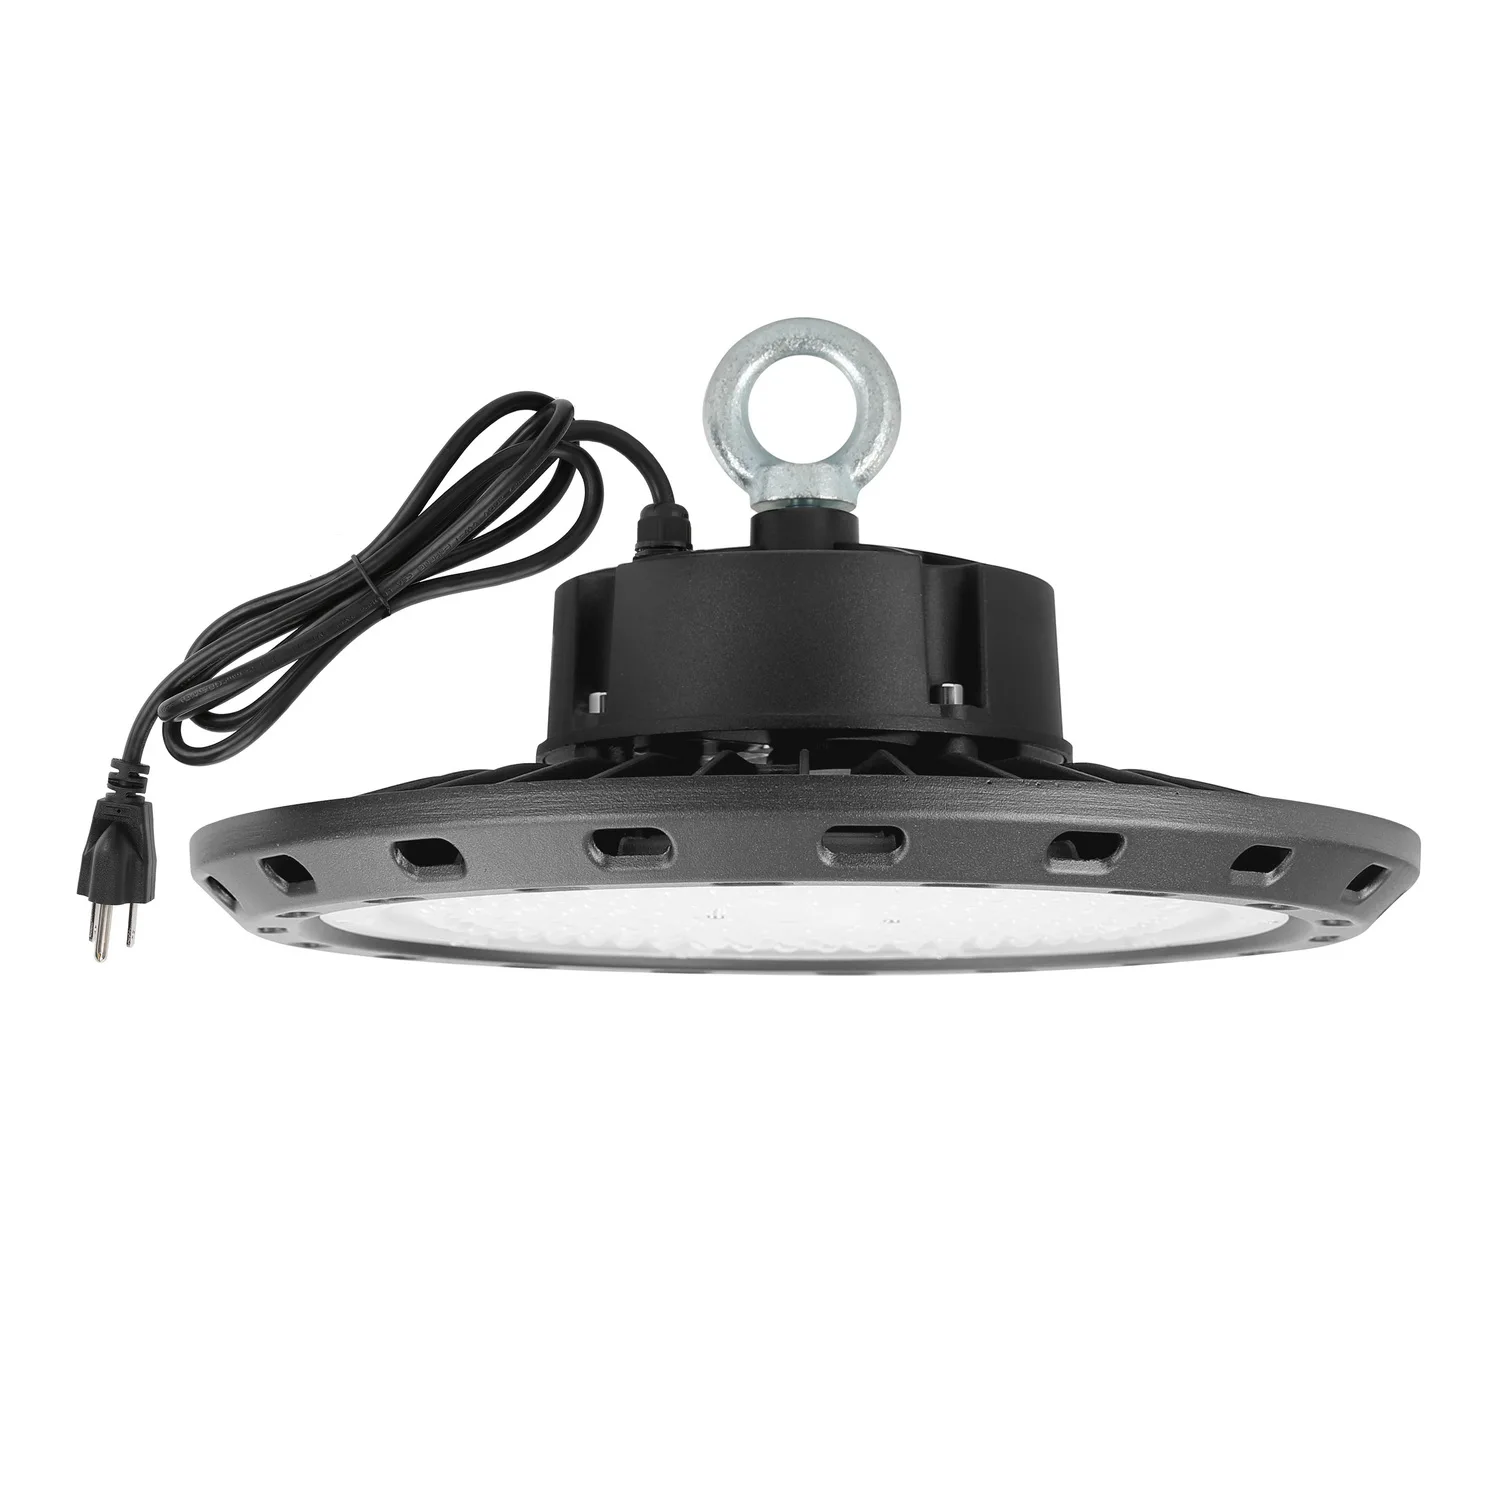 ETL listed 150W UFO light LED High Bay Light USA Warehouse 5000K Garage Light with US Plug 5 ft Cable